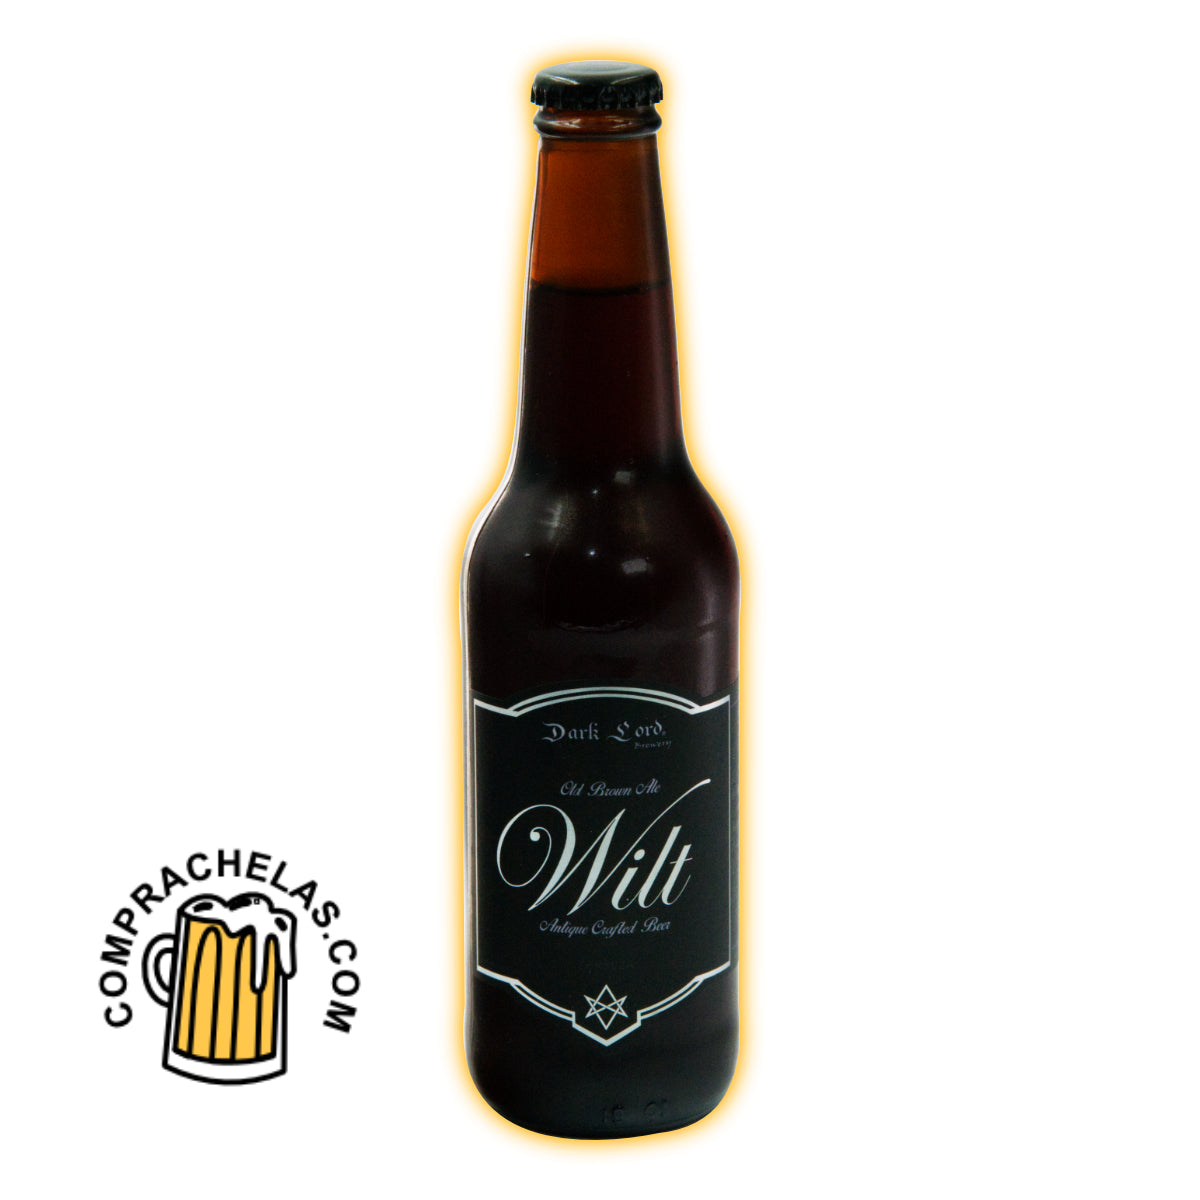 Cerveza "Wilt" Drink what thou Wilt de Dark Lord Brewery: Una English Southern Brown Ale Única